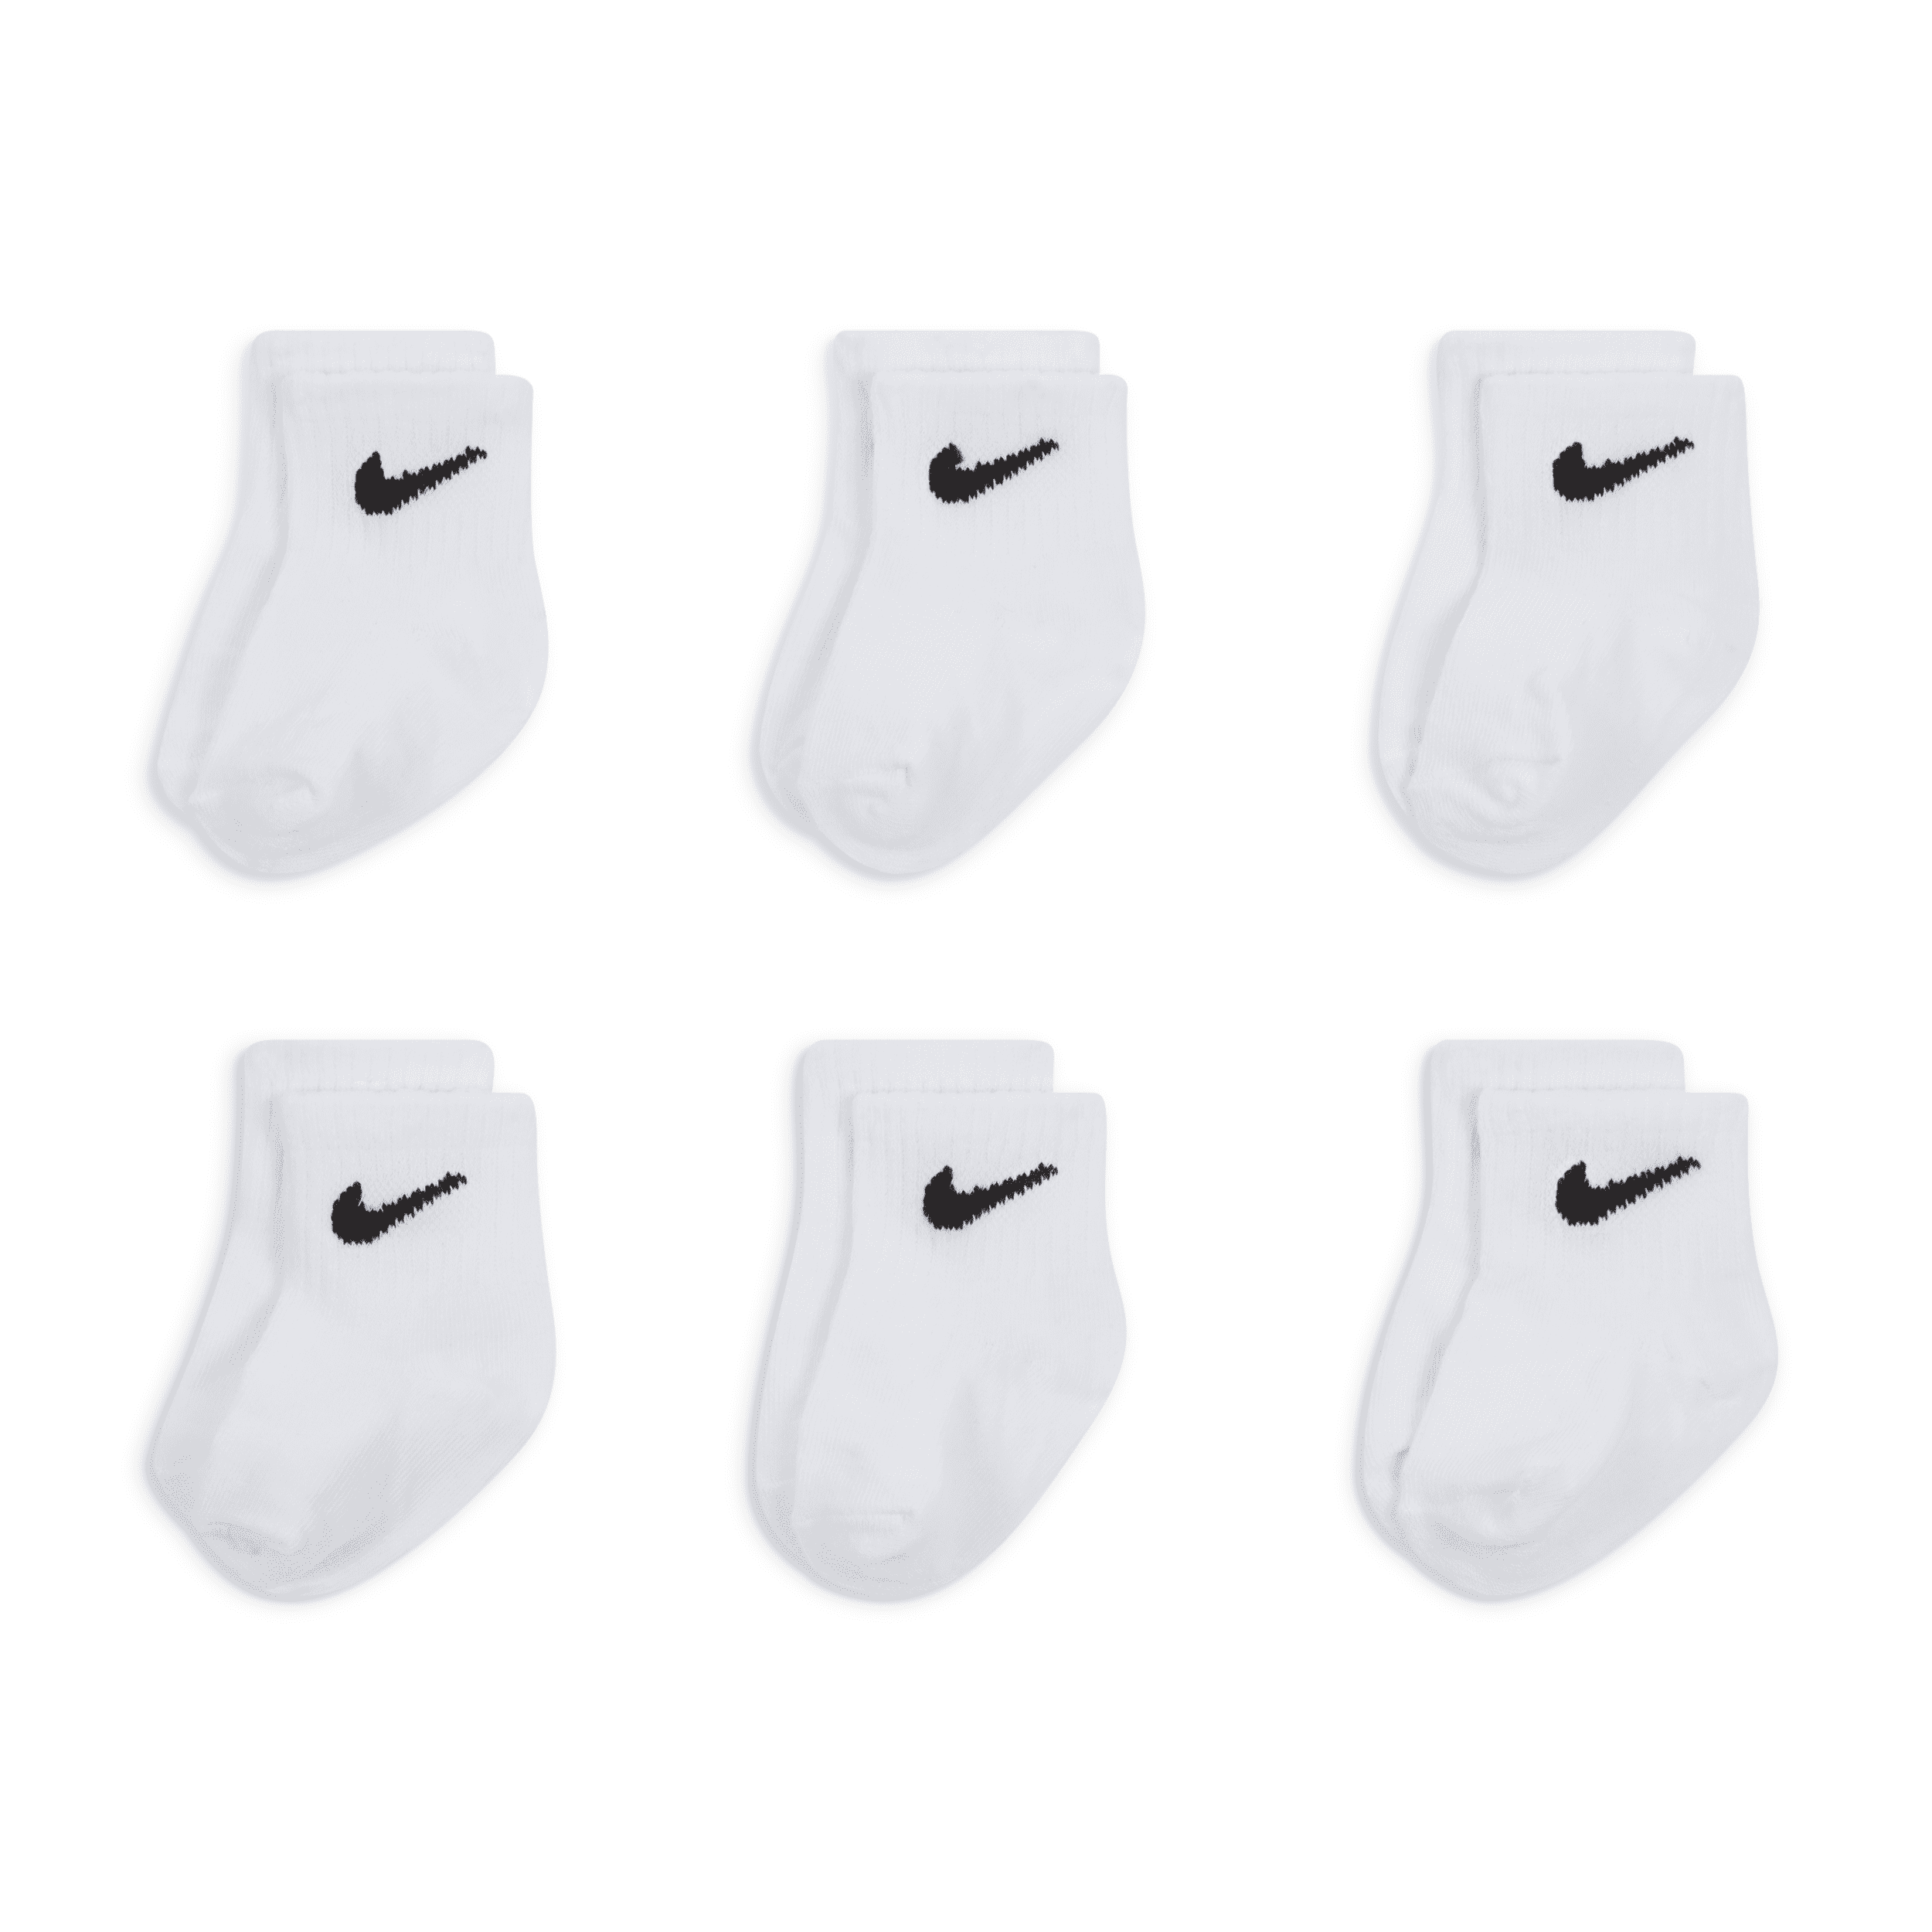 Nike Logo Ankle Socks Box Set (6 Pairs) Baby Socks In White